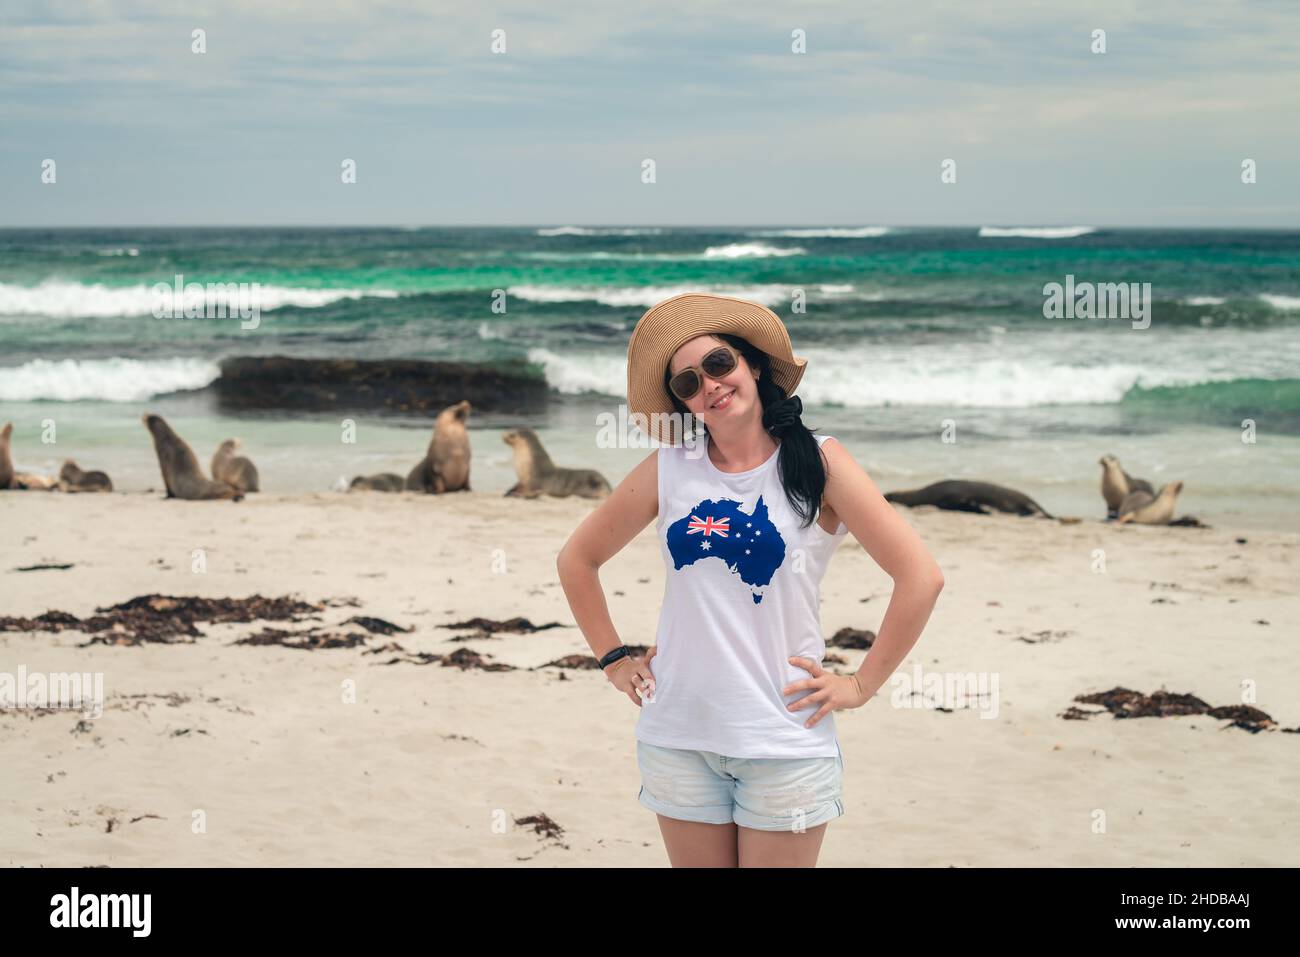 Happy smiling woman posing for a photo next to the sea lions at Seal Bay, Kangaroo Island, South Australia Stock Photo